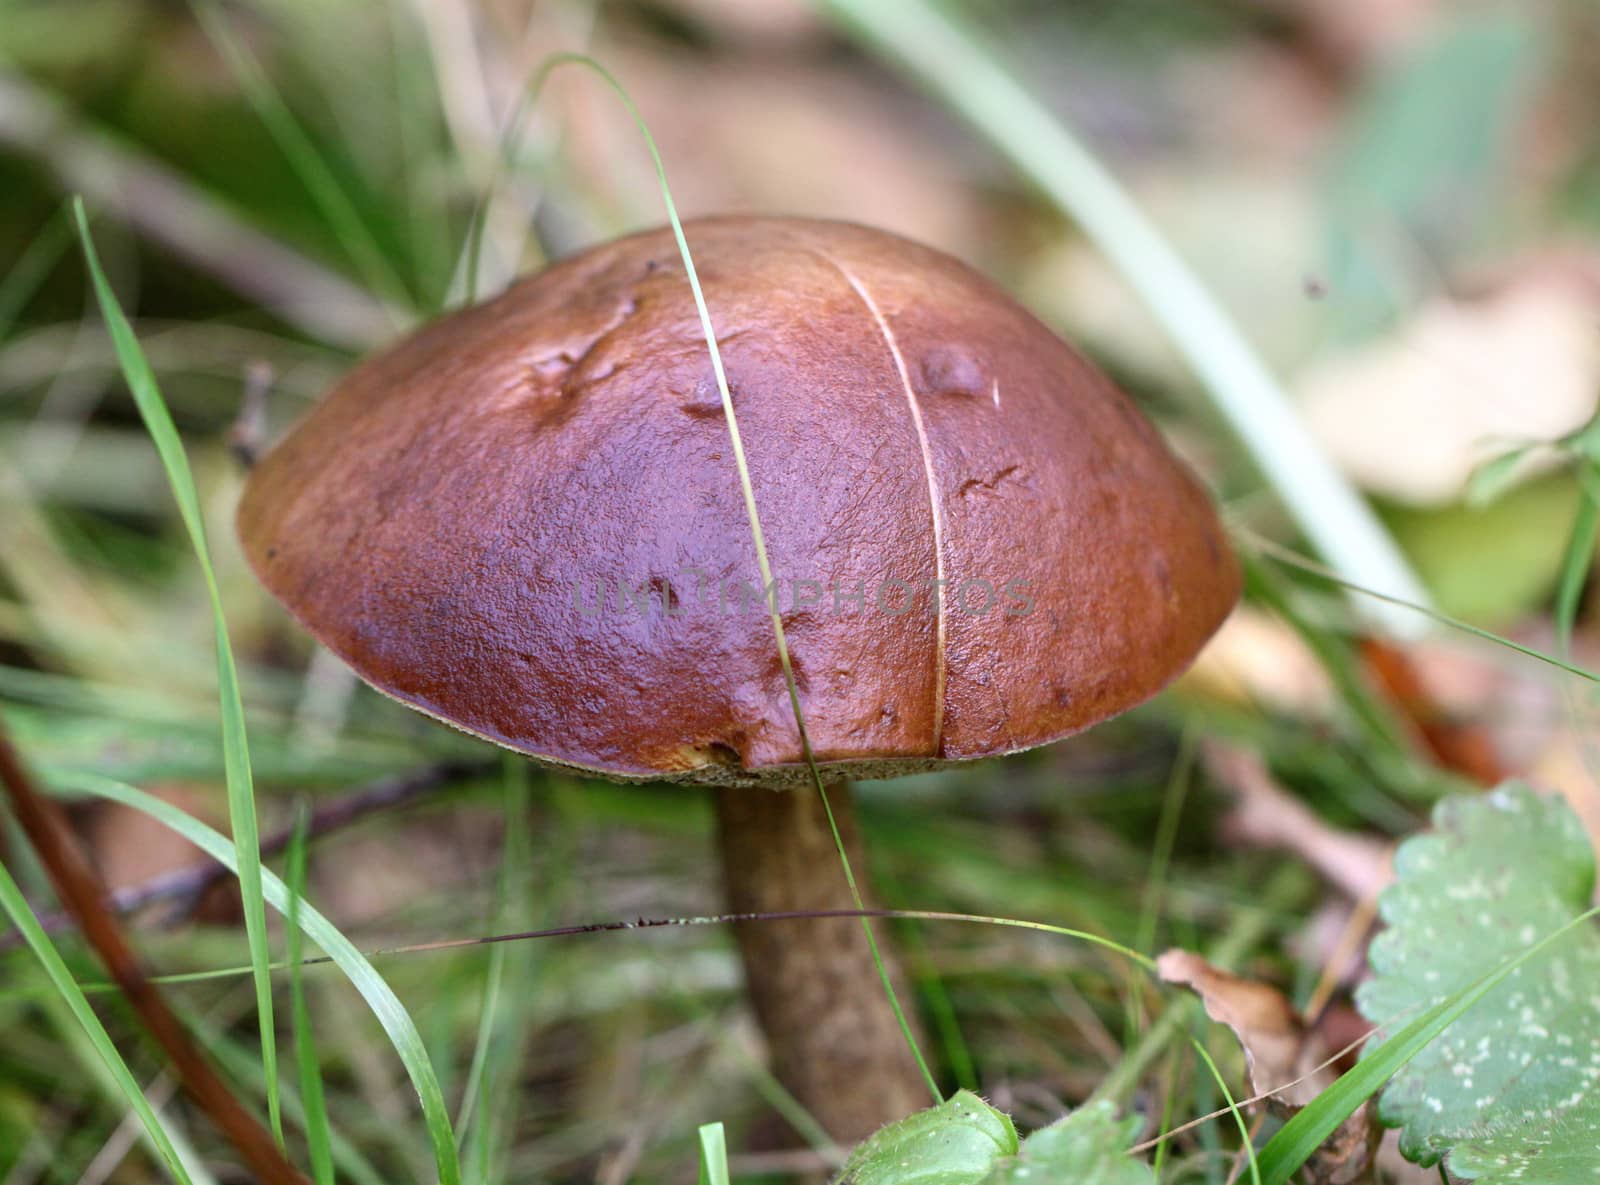 Brown cap boletus mushroom in the forest